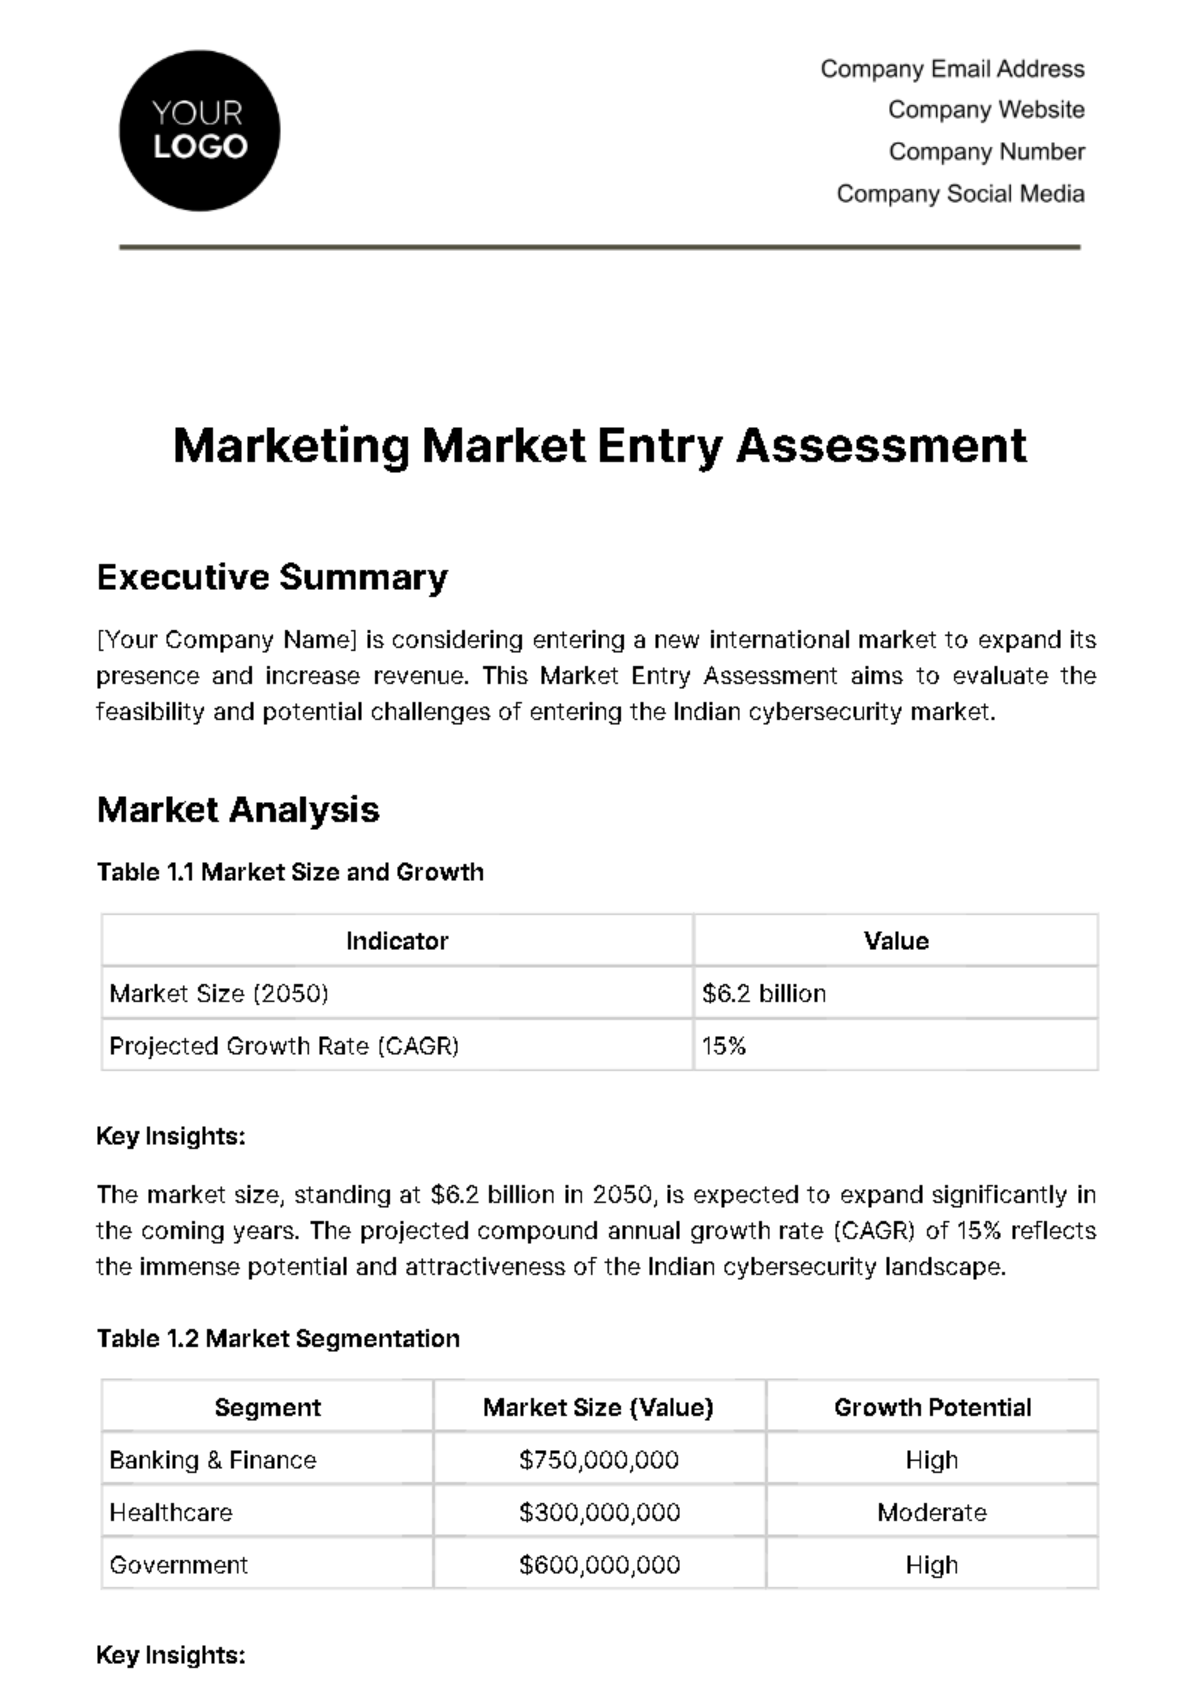 Marketing Market Entry Assessment Template